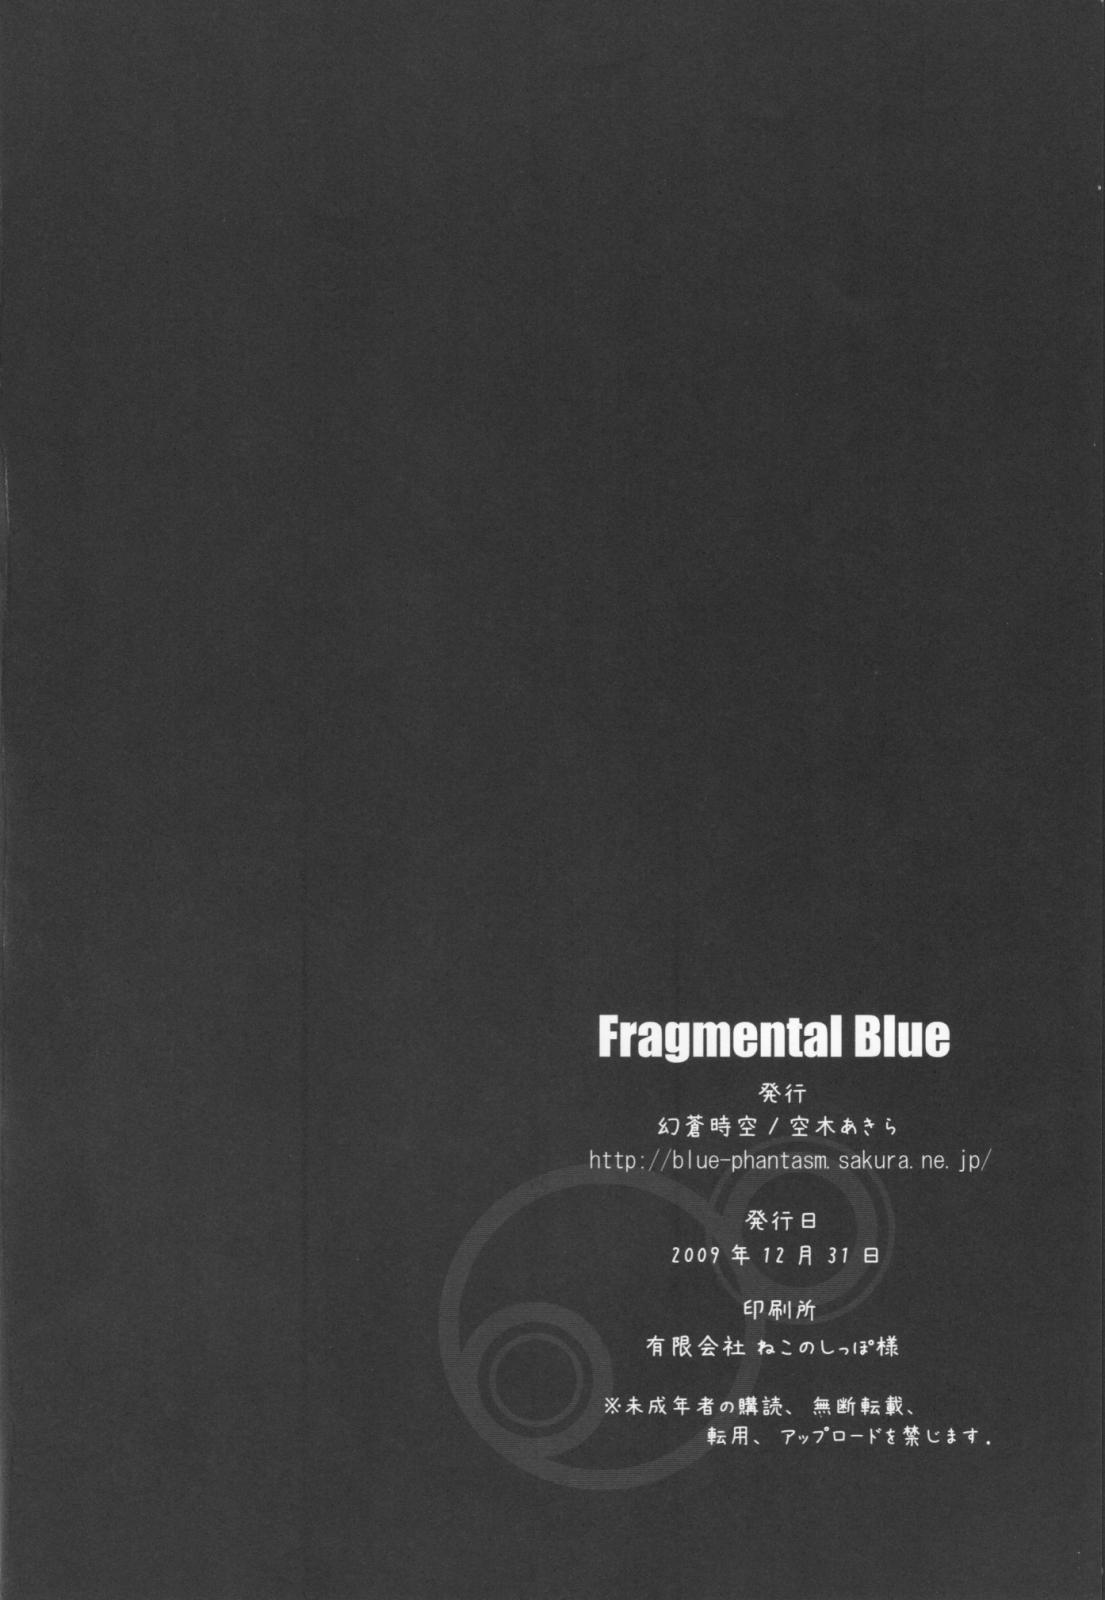 Fragmental Blue 20